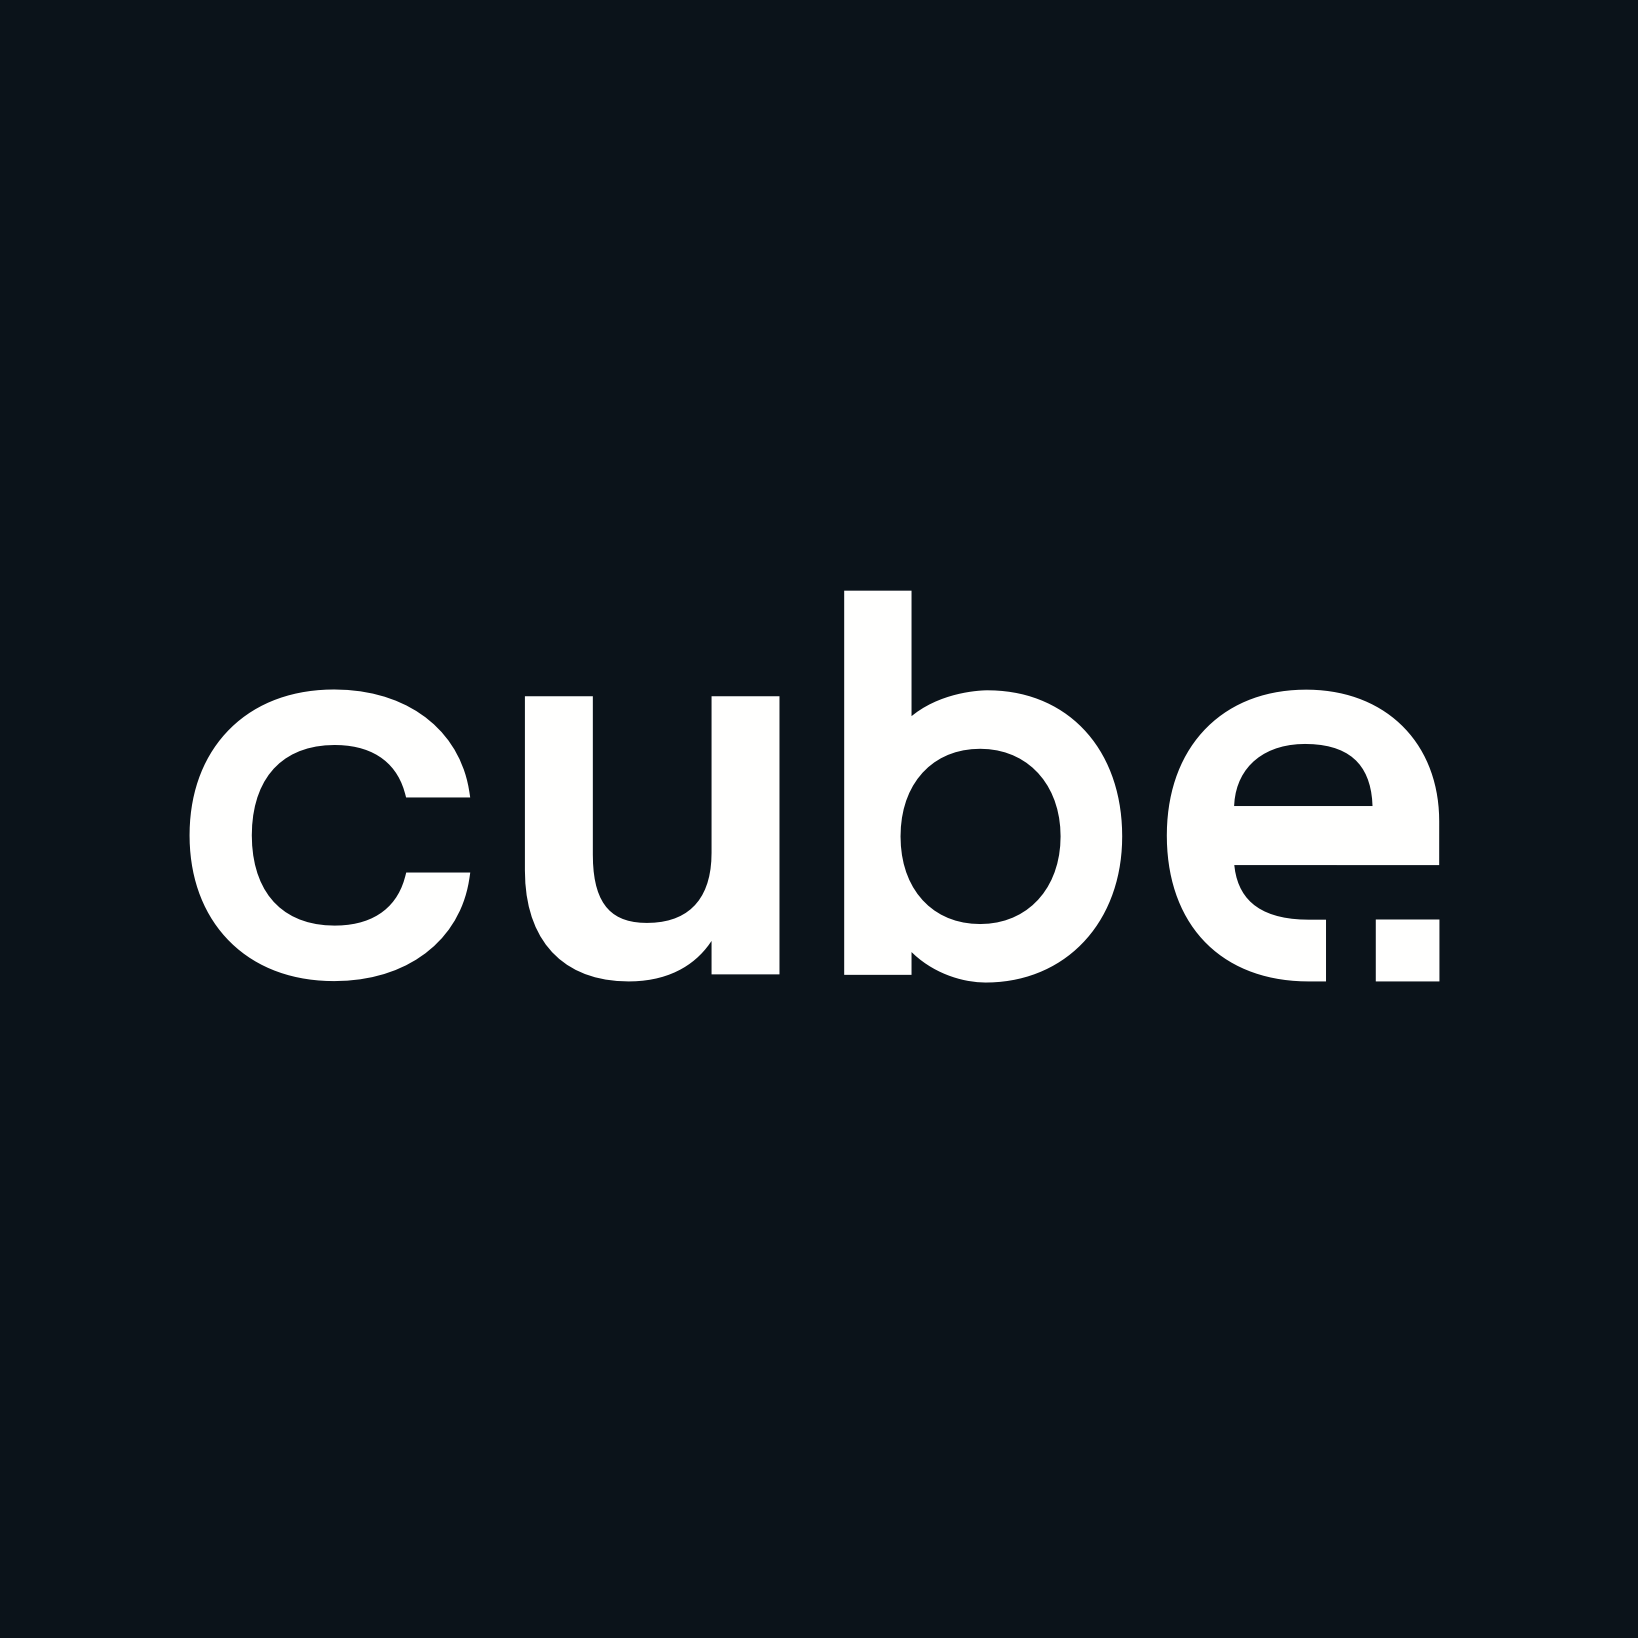 Cube logo logo